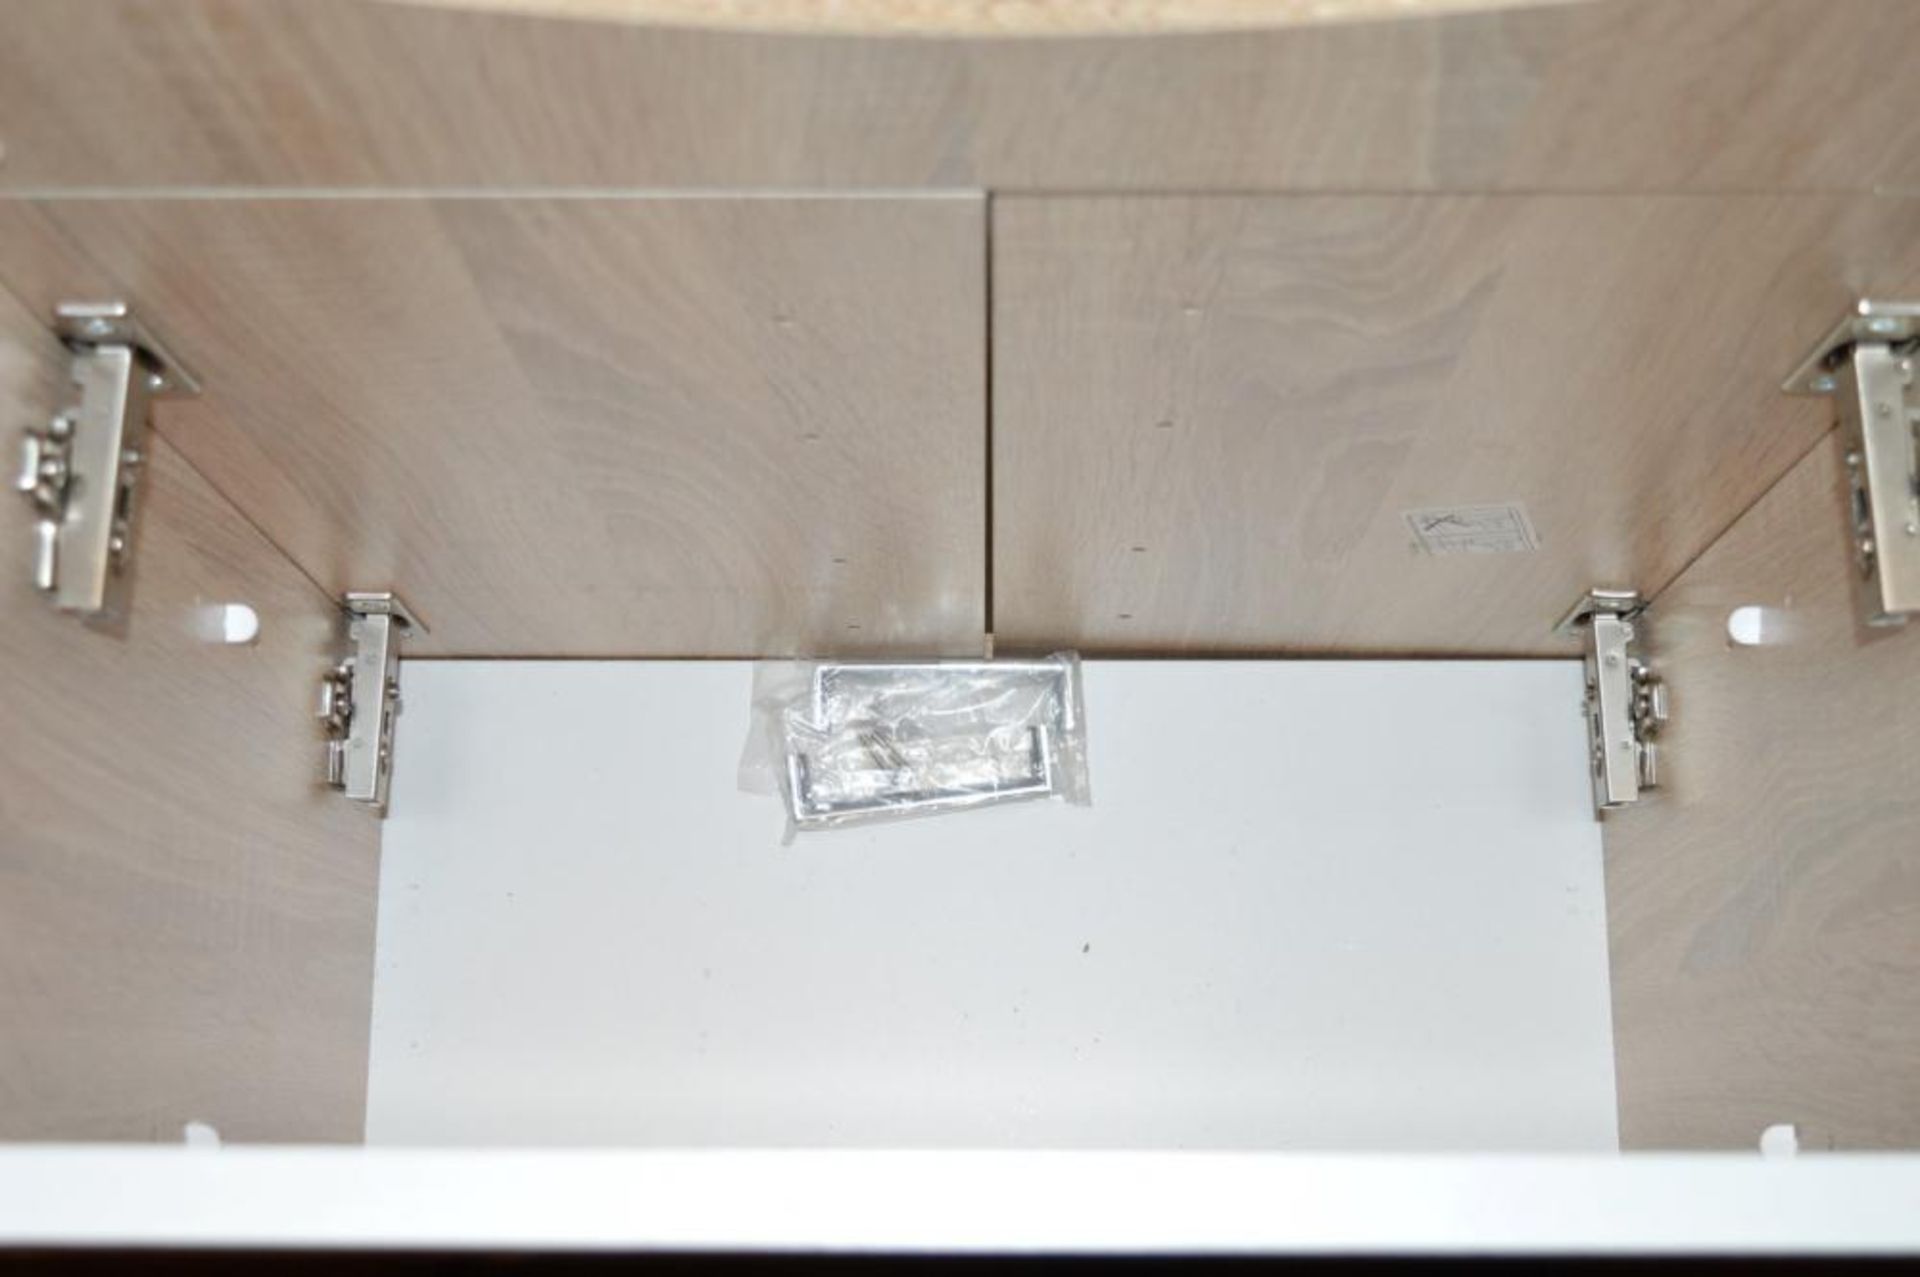 1 x Oak 520mm Bathroom Vanity Cabinet - Sink Basin Not Included - CL190 - Ref GIL011 - Unused - Image 2 of 4